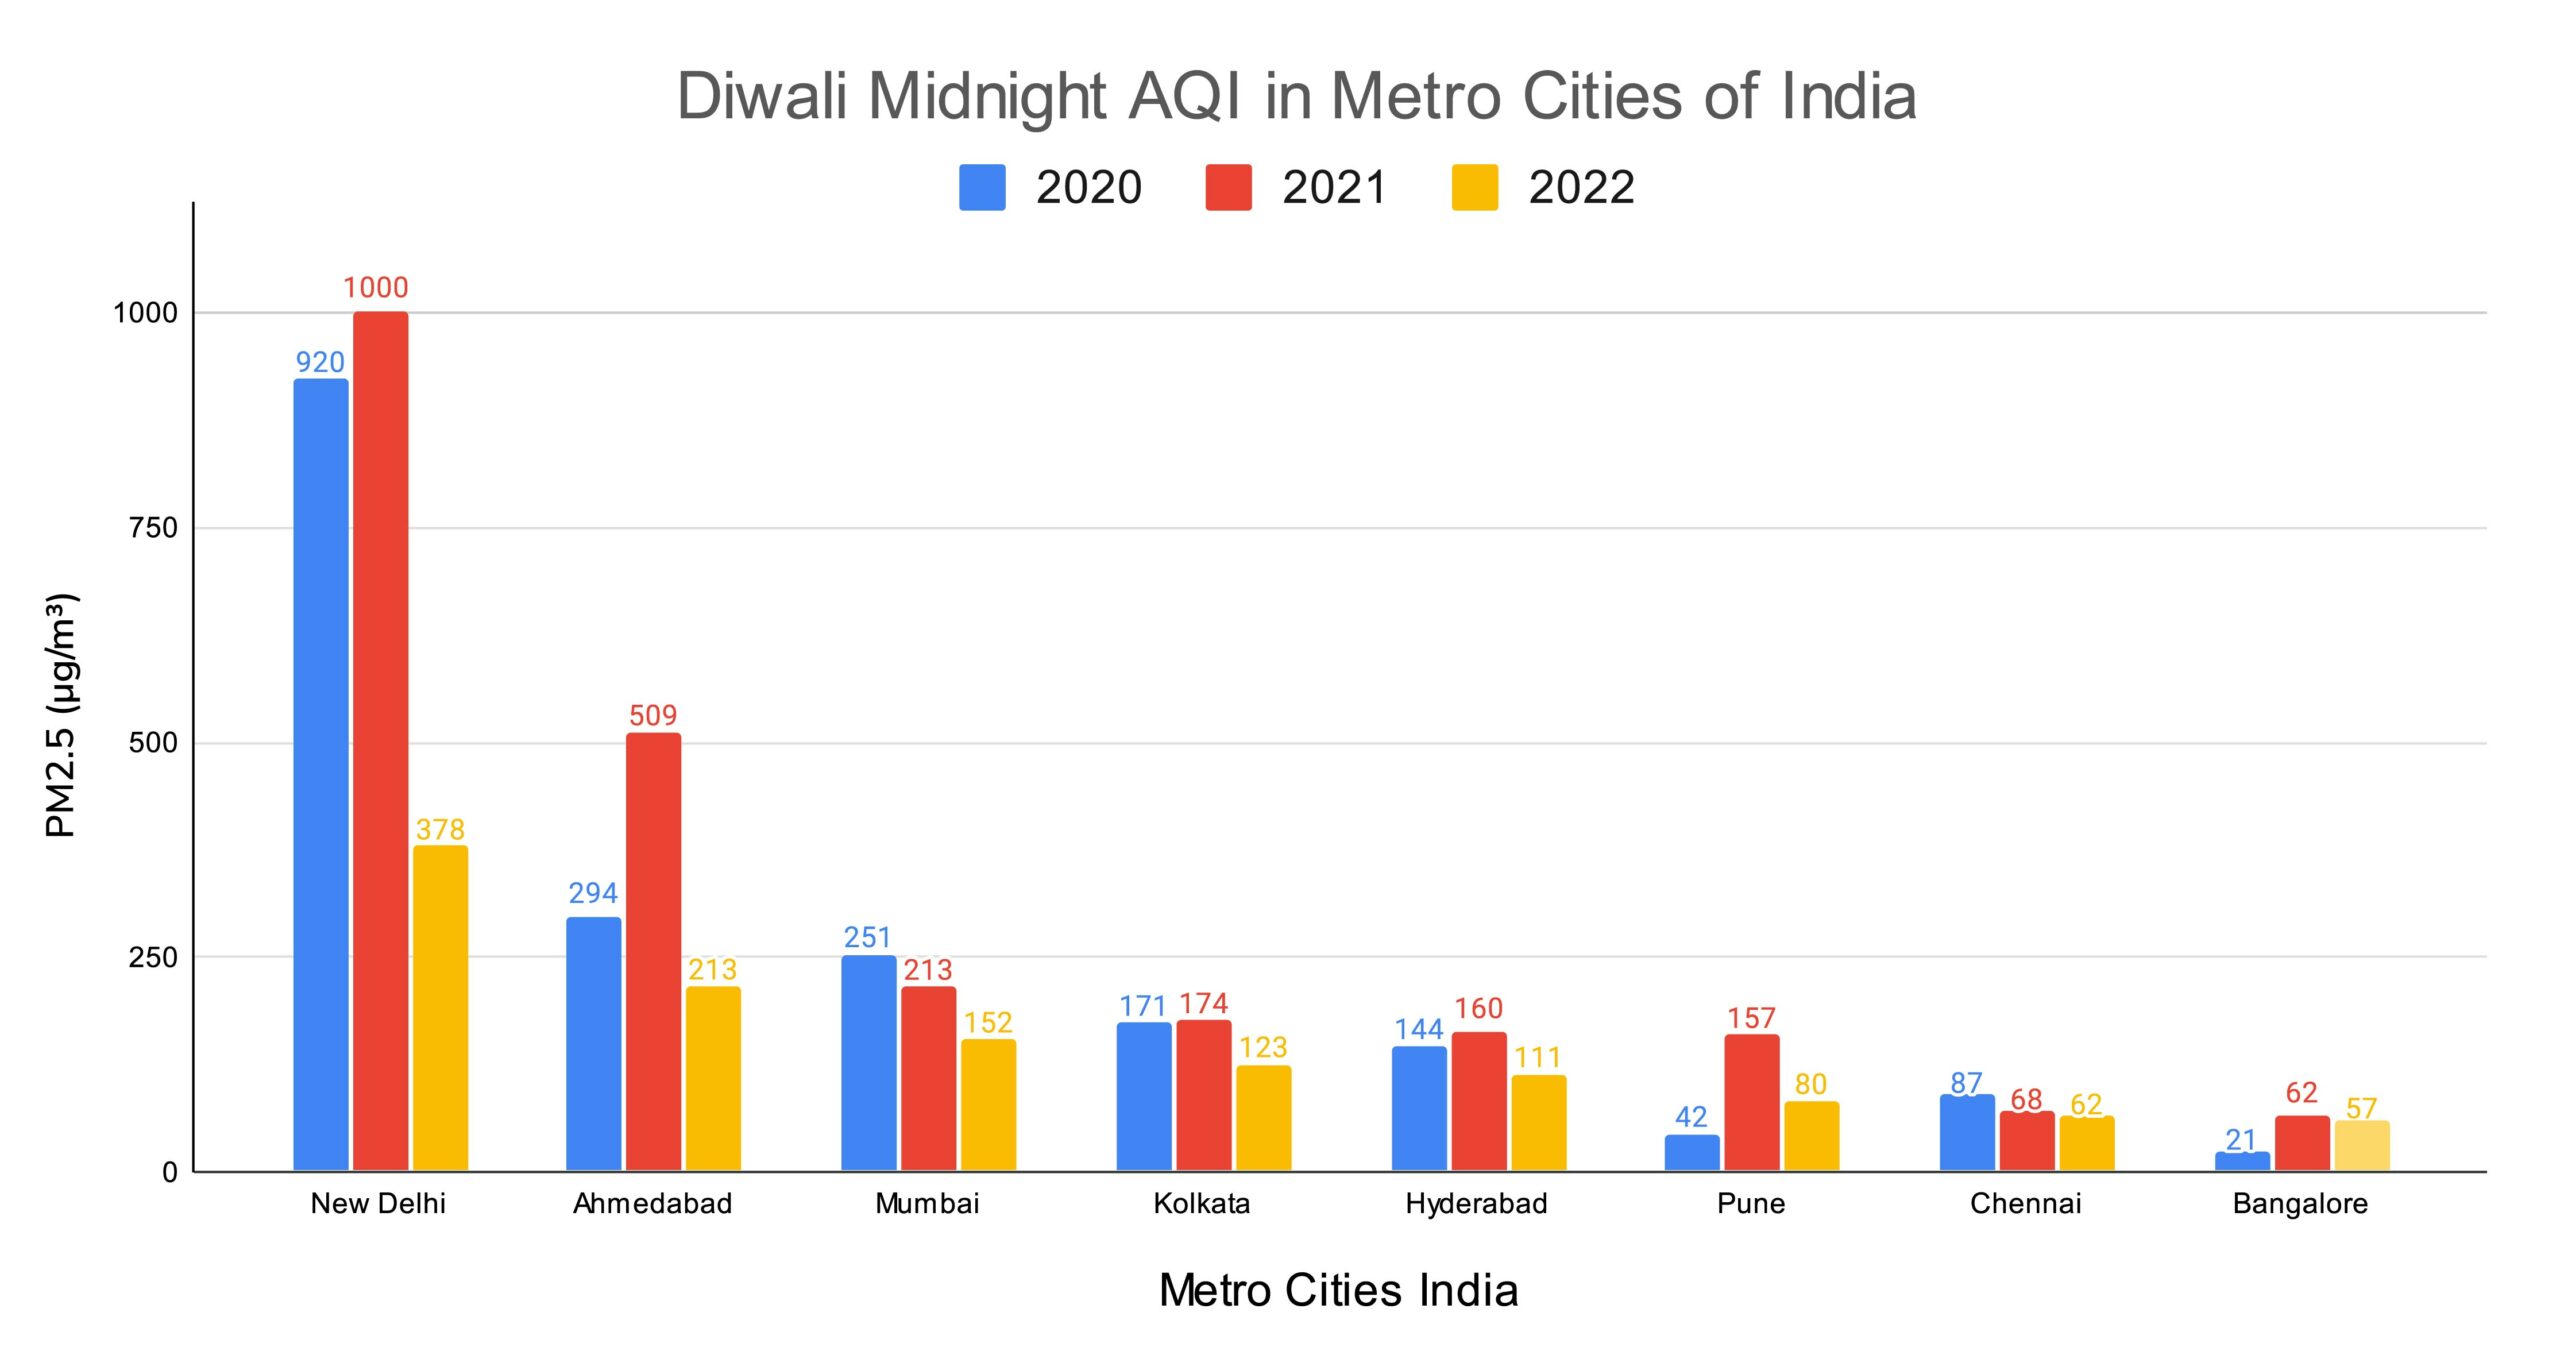 Diwali PM Metro Cities of India